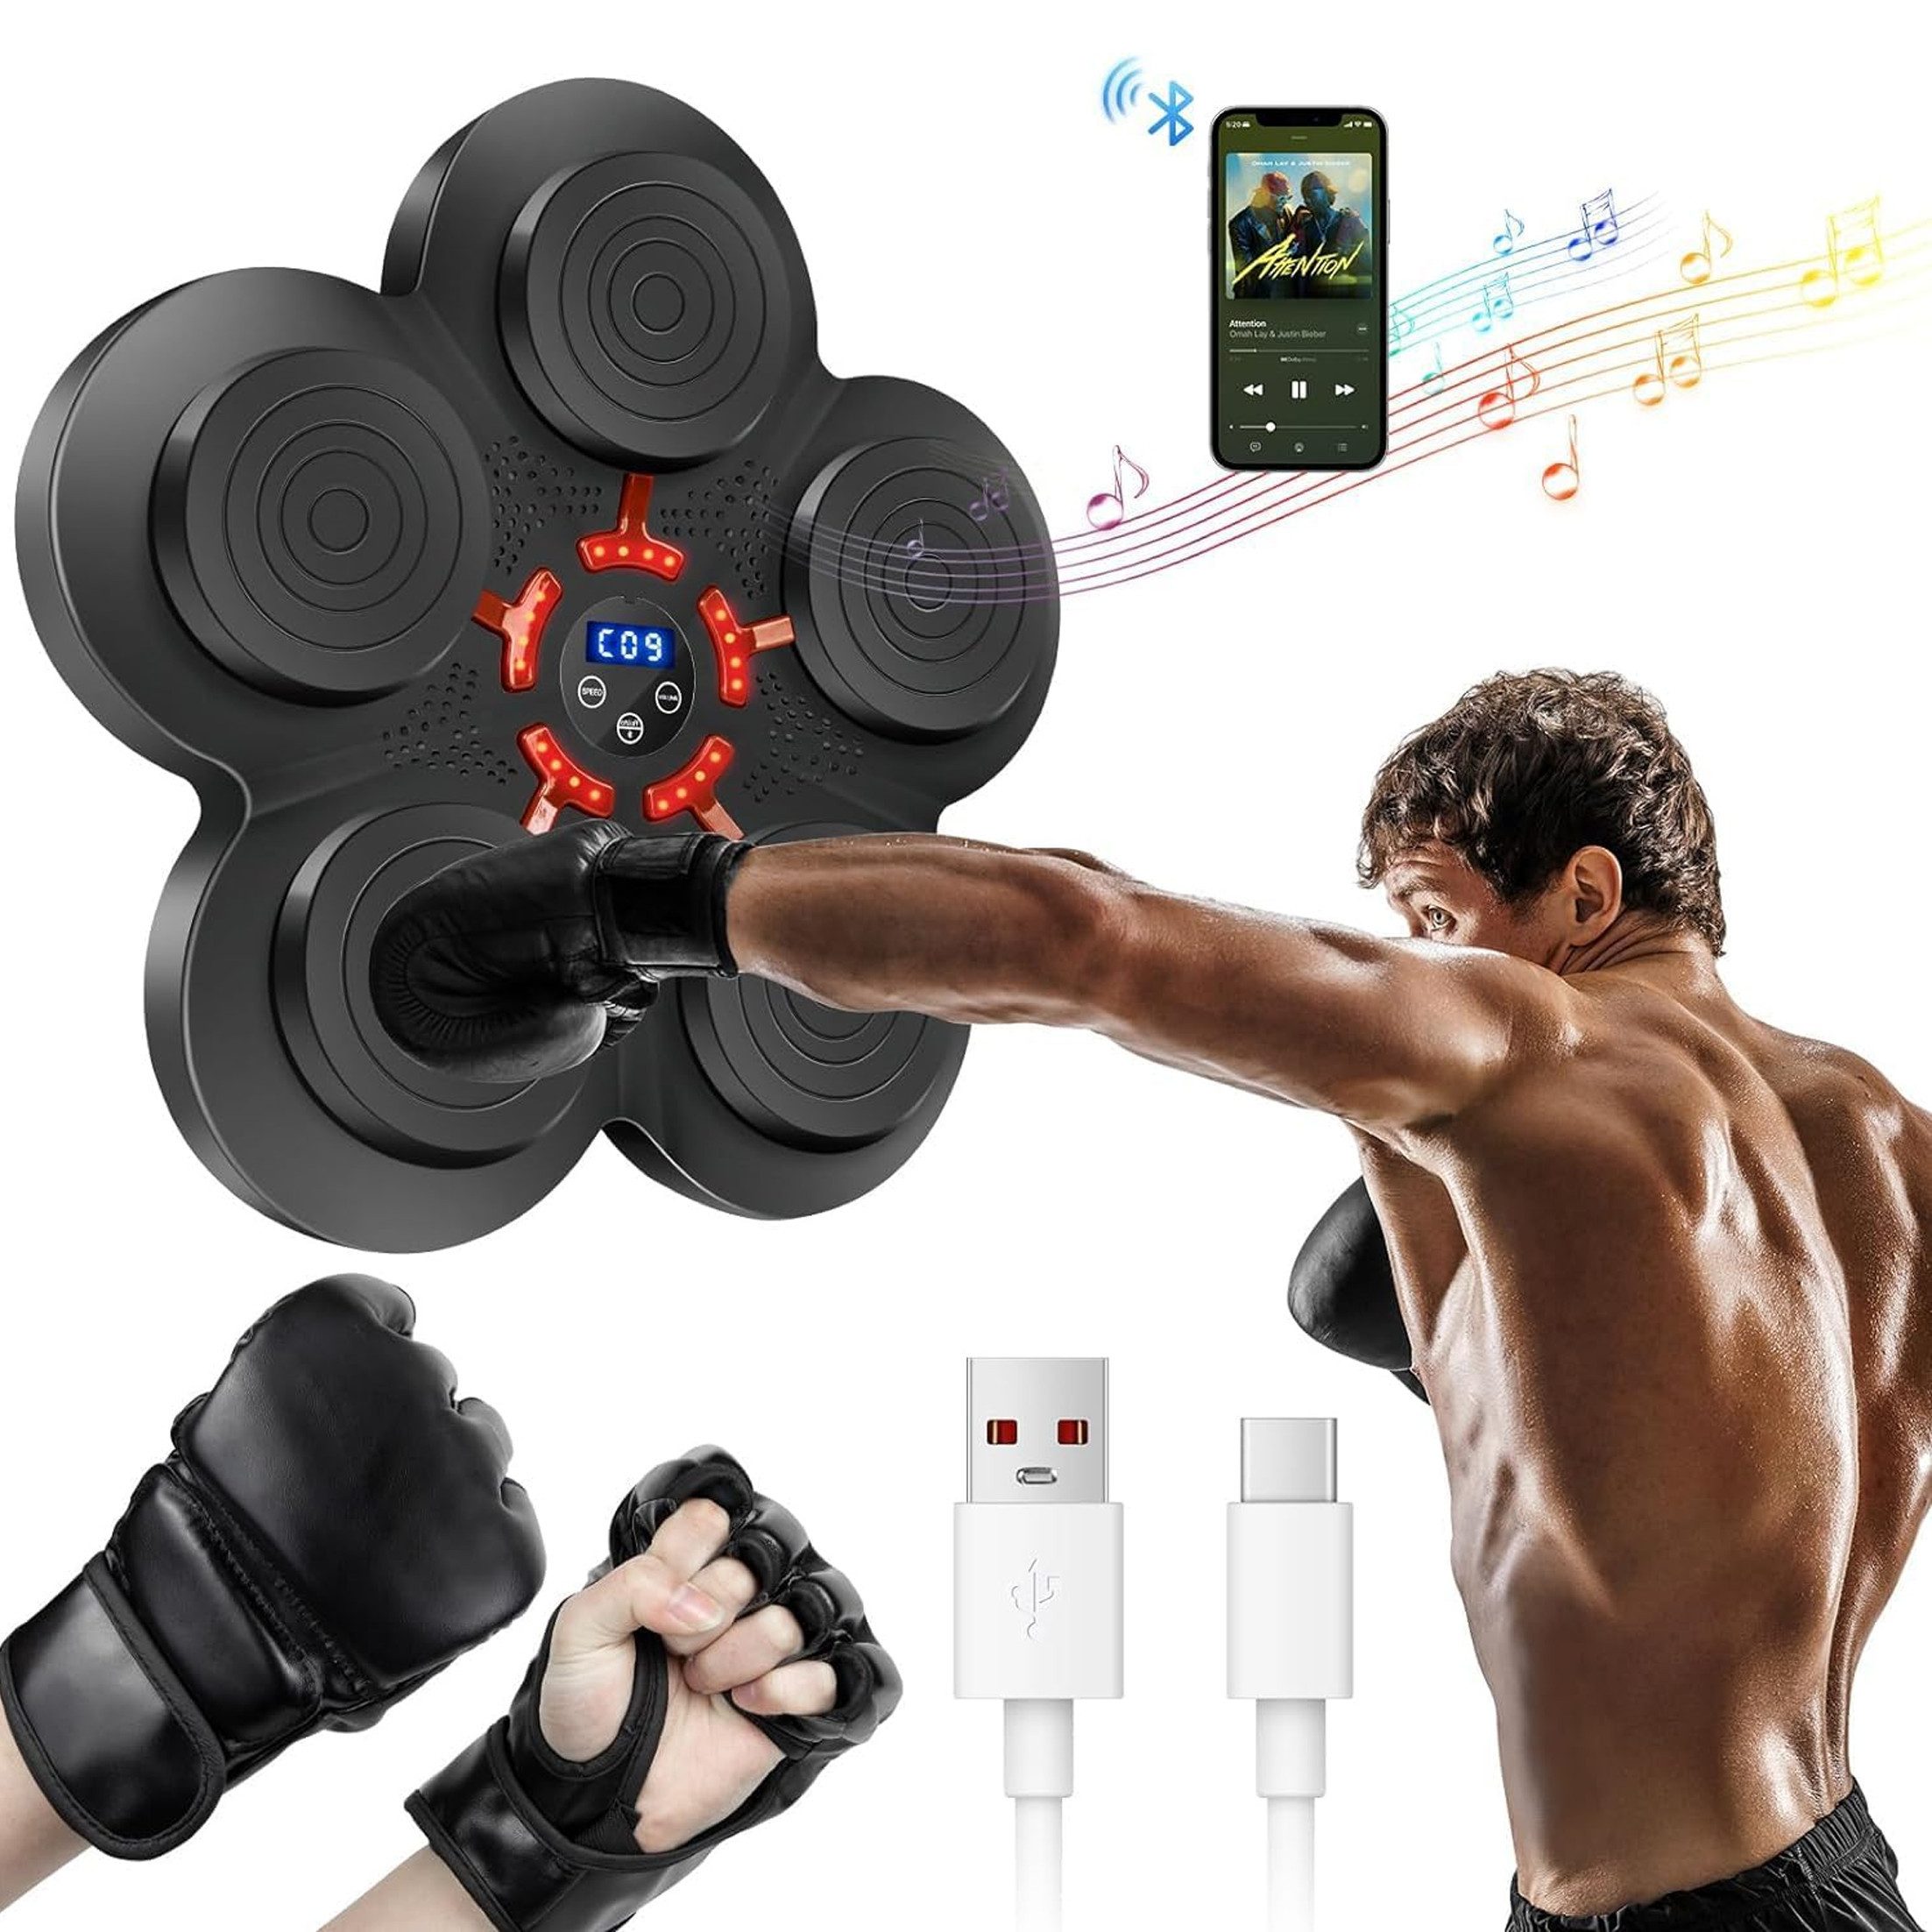 Tadow Boxstation Smart Music Boxing Target,Fitness Boxing Training,Wandboxen, Boxen zu Musikbegleitung